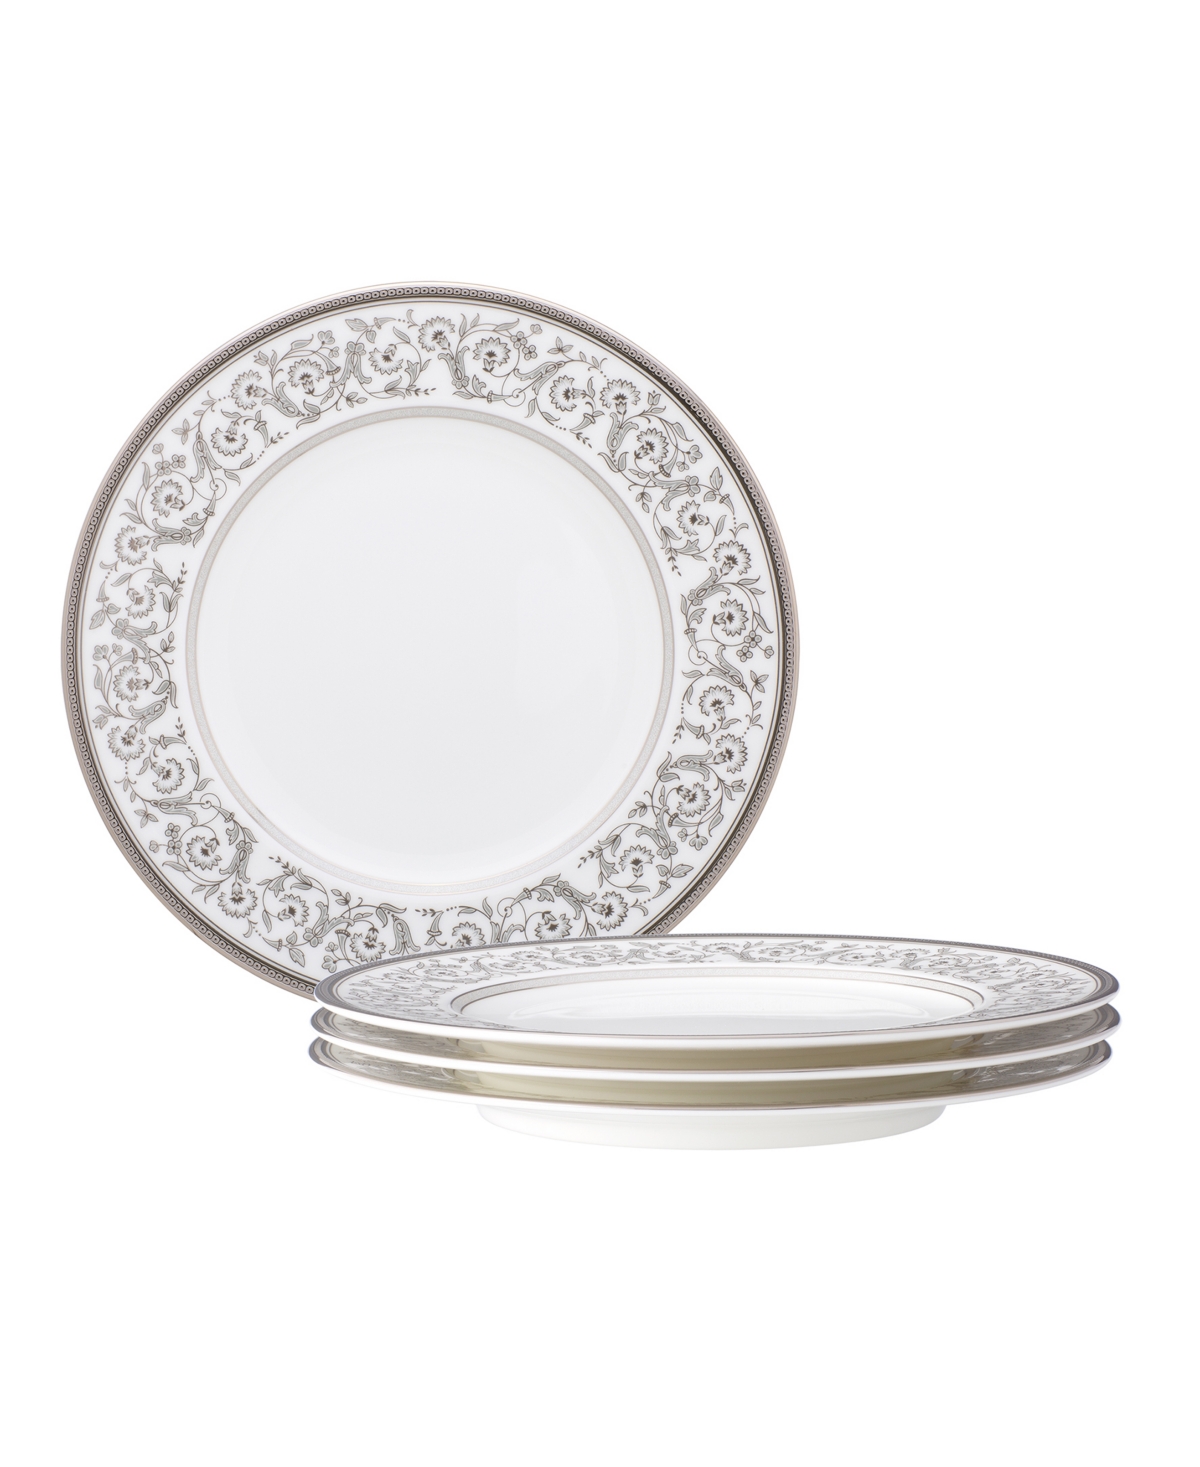 Noritake Summit Platinum Set Of 4 Salad Plates, Service For 4 In White